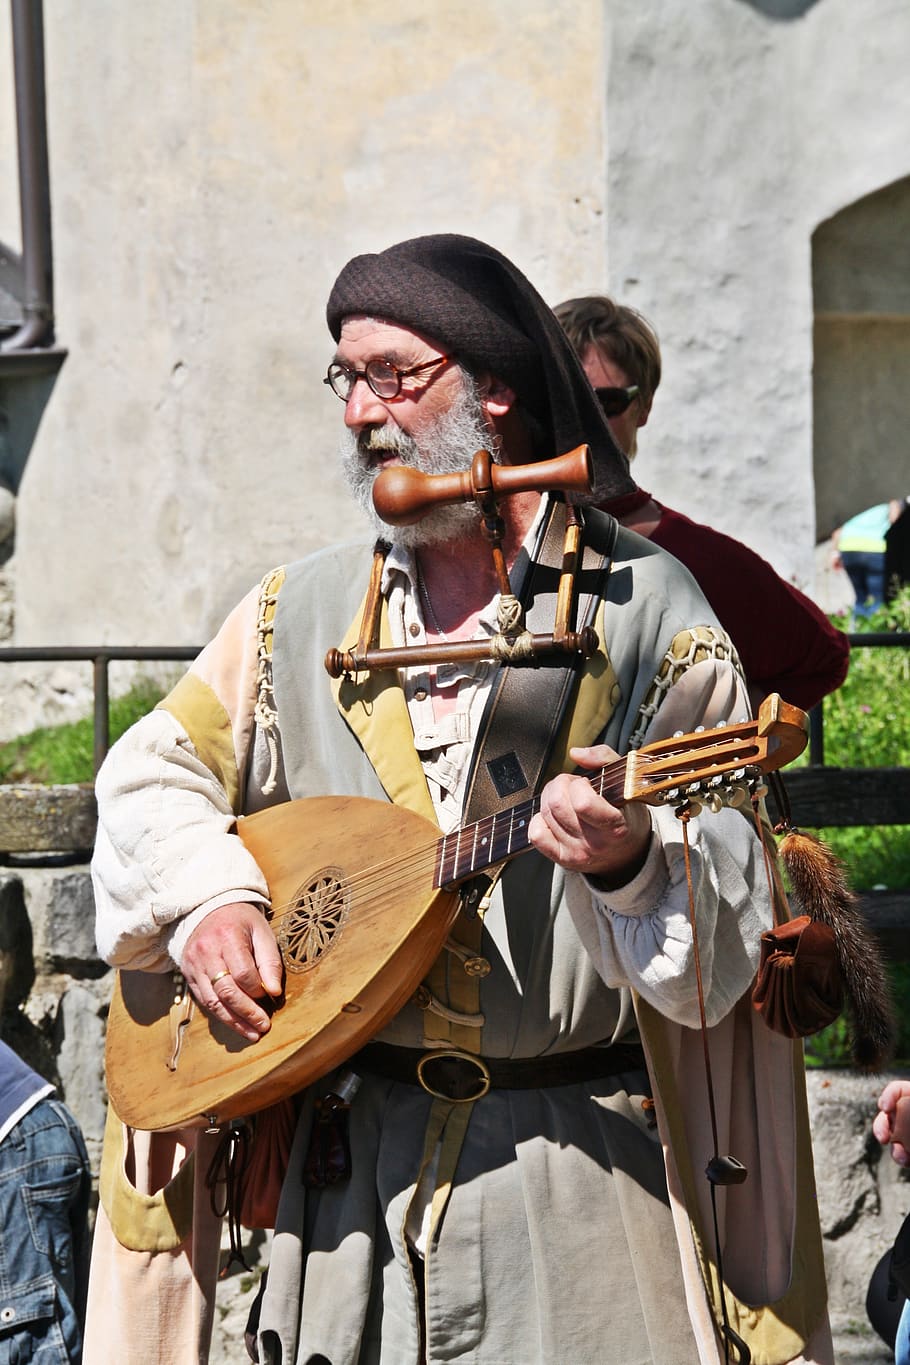 minne, minstrel, middle ages, costume, troubadour, musician, jester, customs, panel, fortress